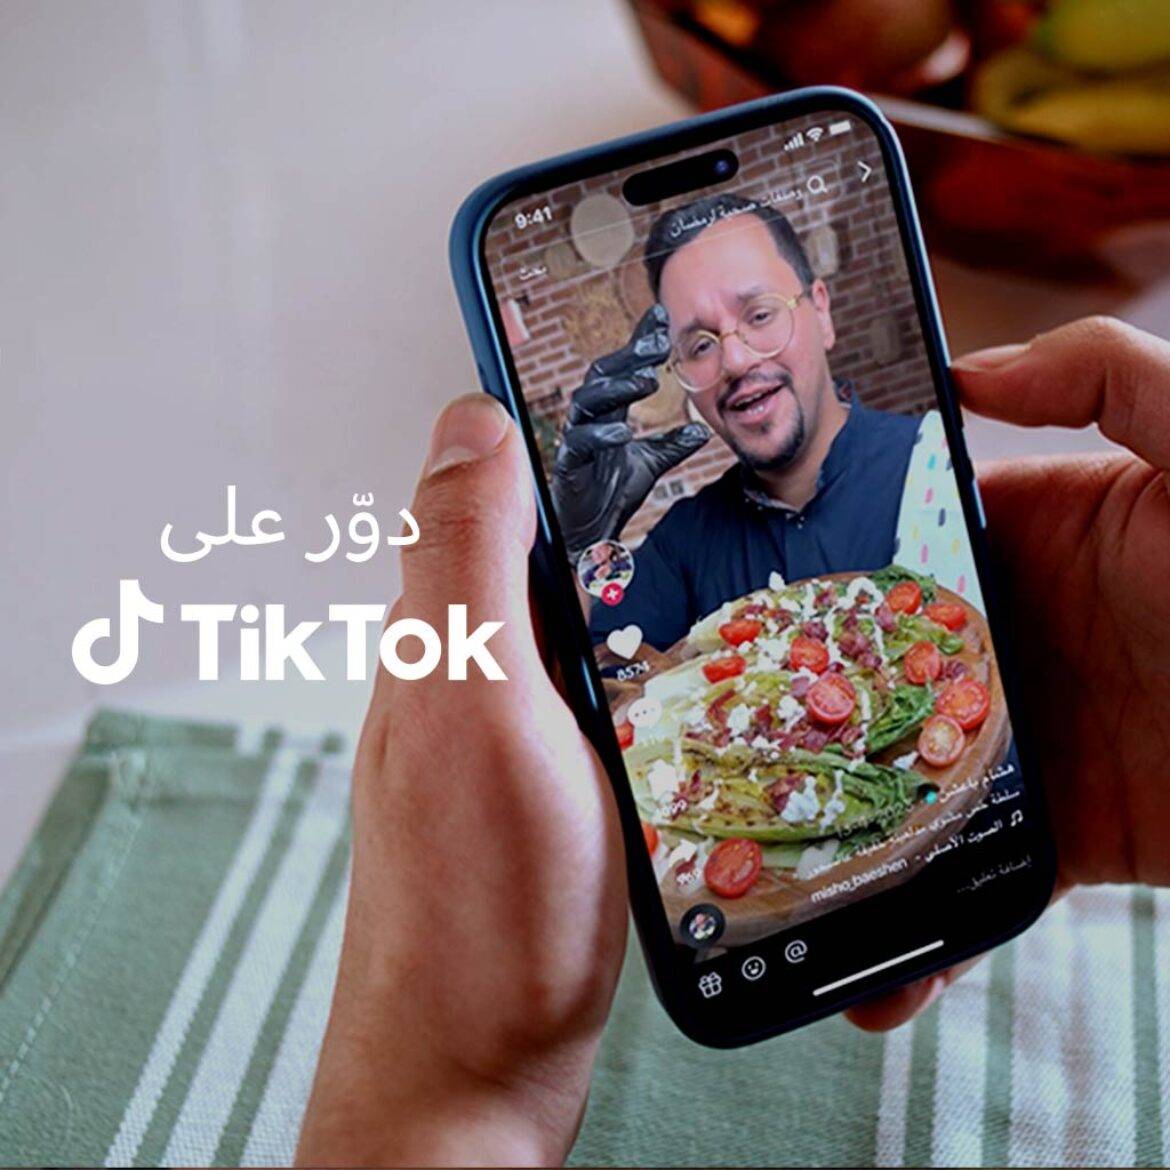 TikTok Launches Ramadan Guide to Foster Creativity, Community, and Celebration